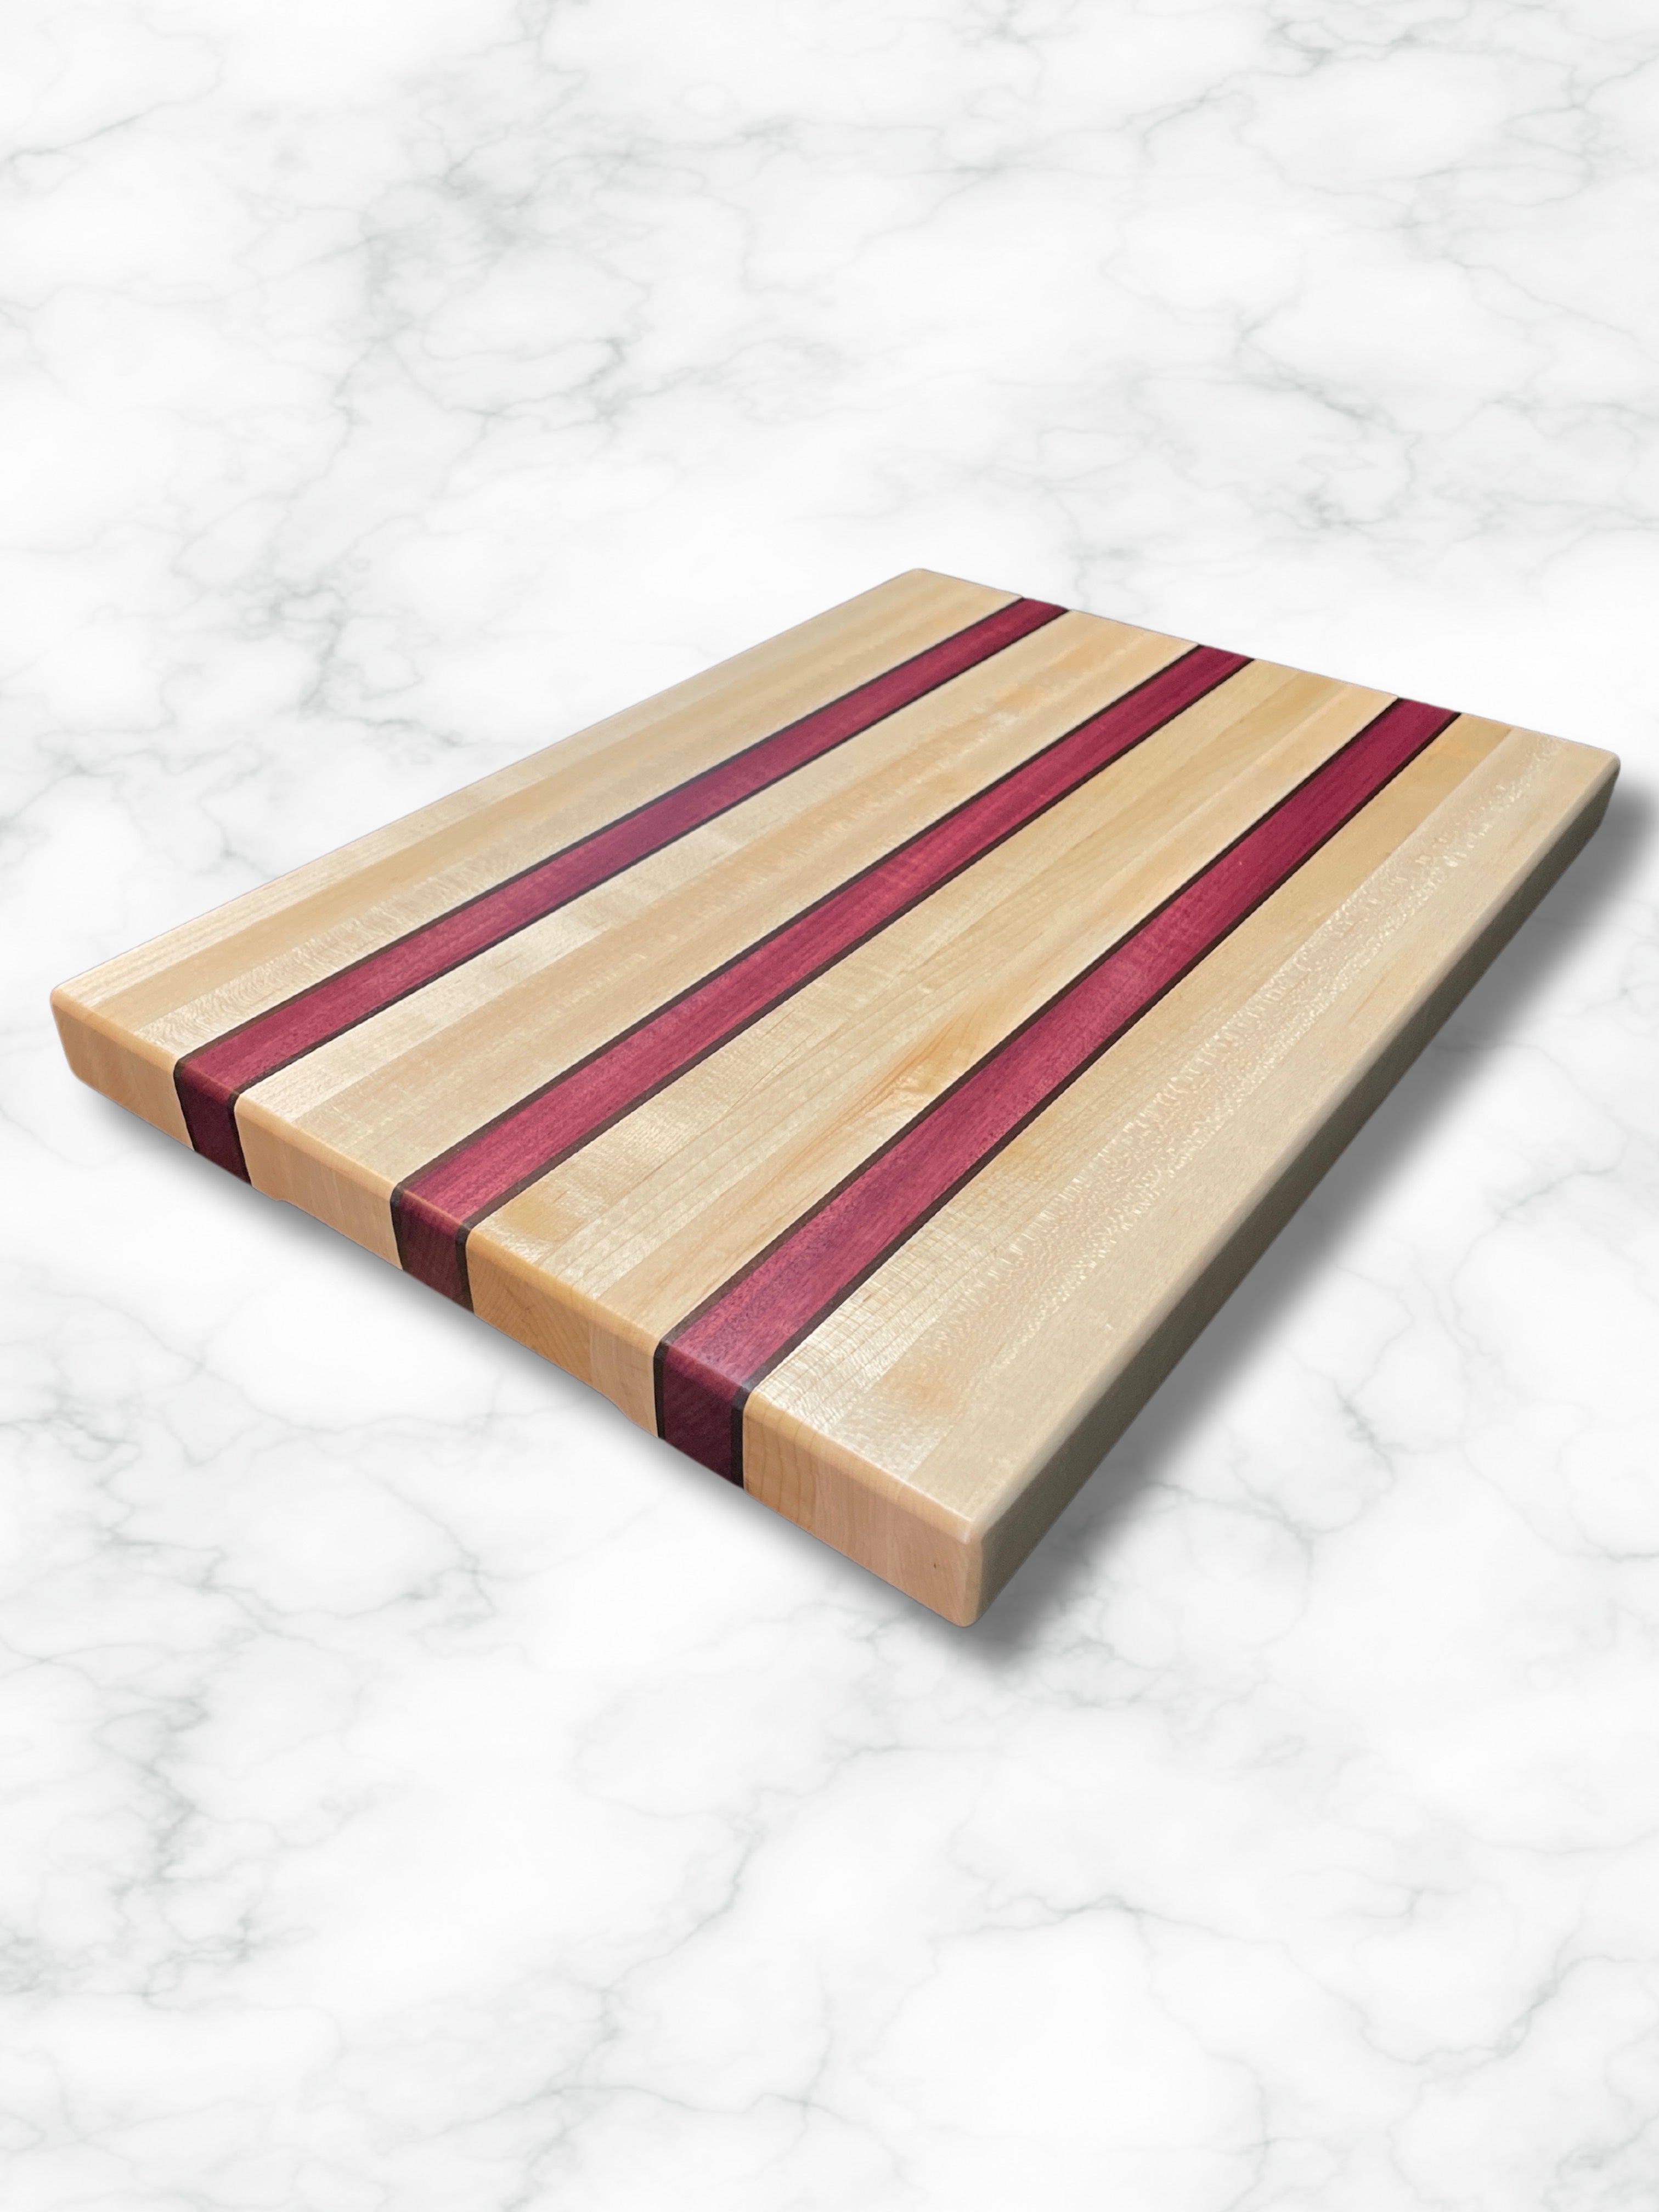 custom handmade edge grain maple purpleheart walnut wood cutting board, side view